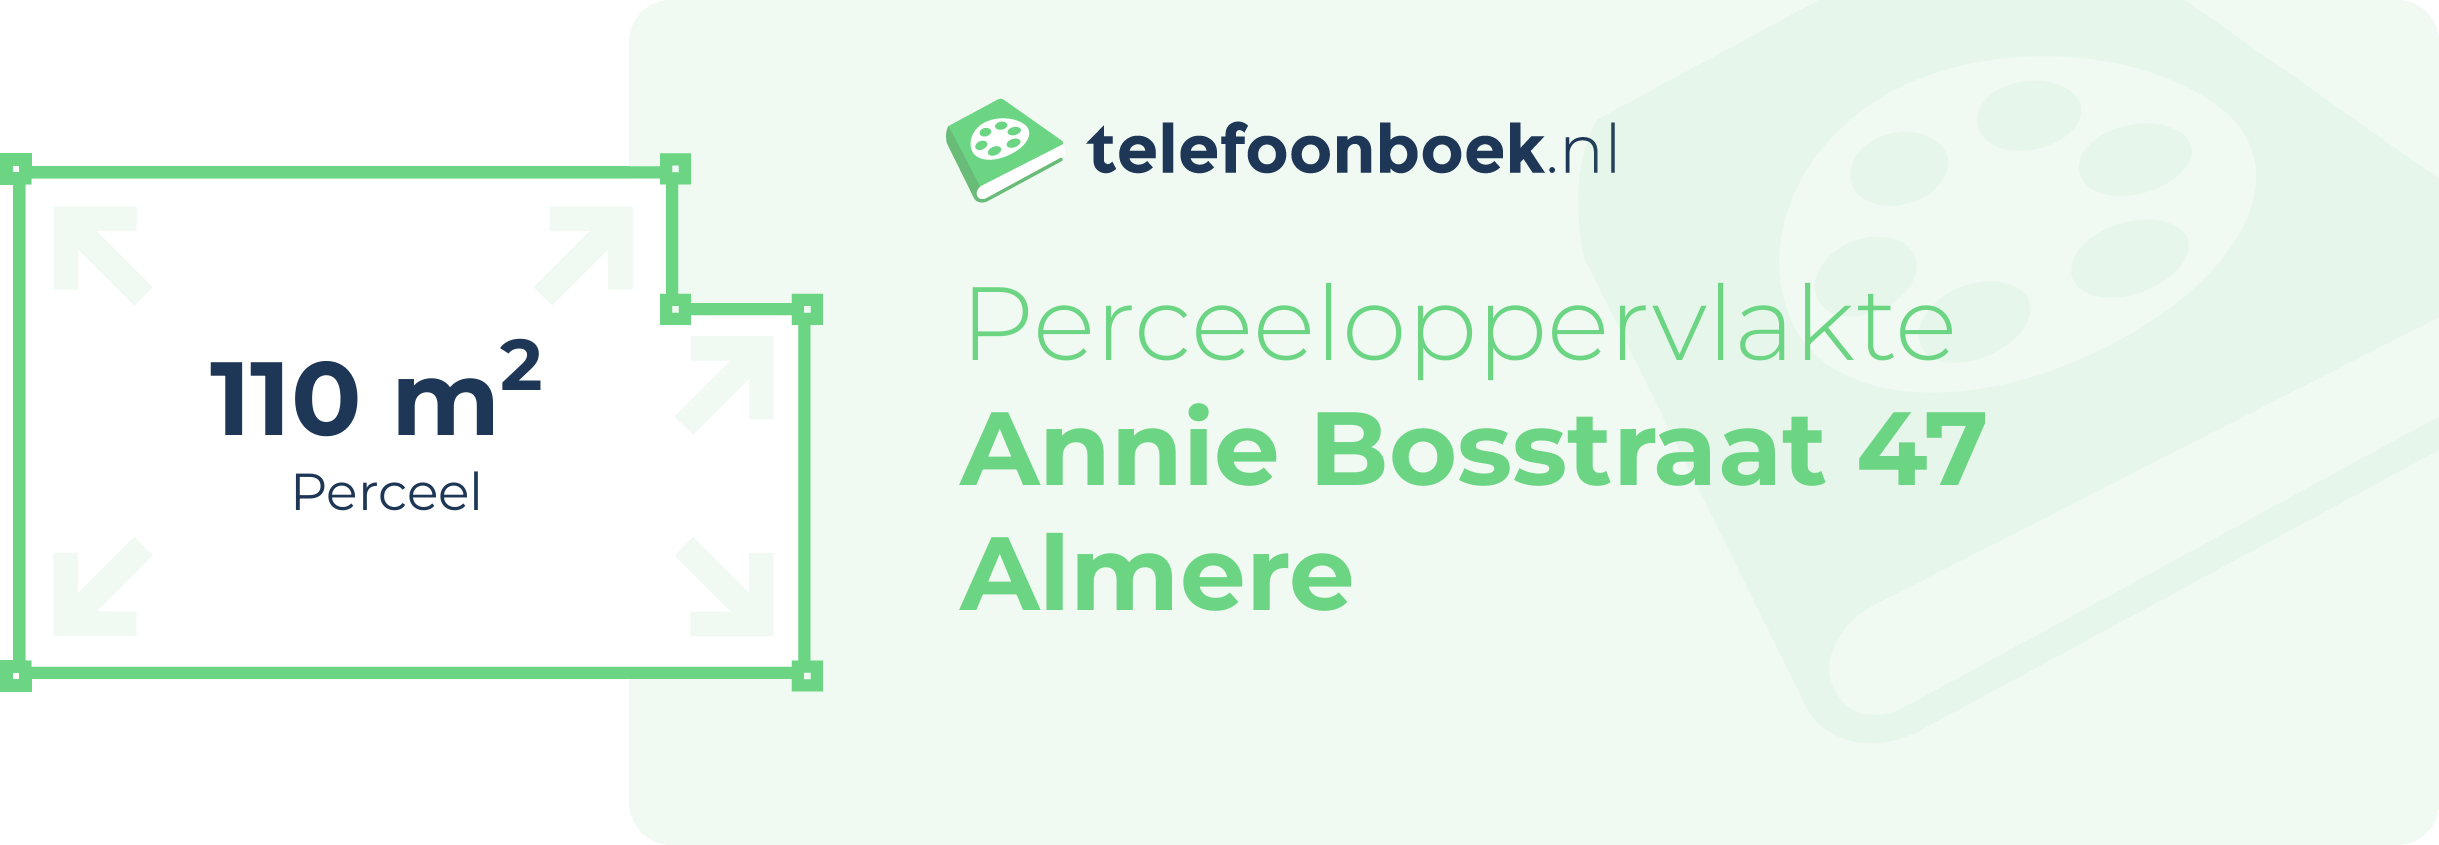 Perceeloppervlakte Annie Bosstraat 47 Almere